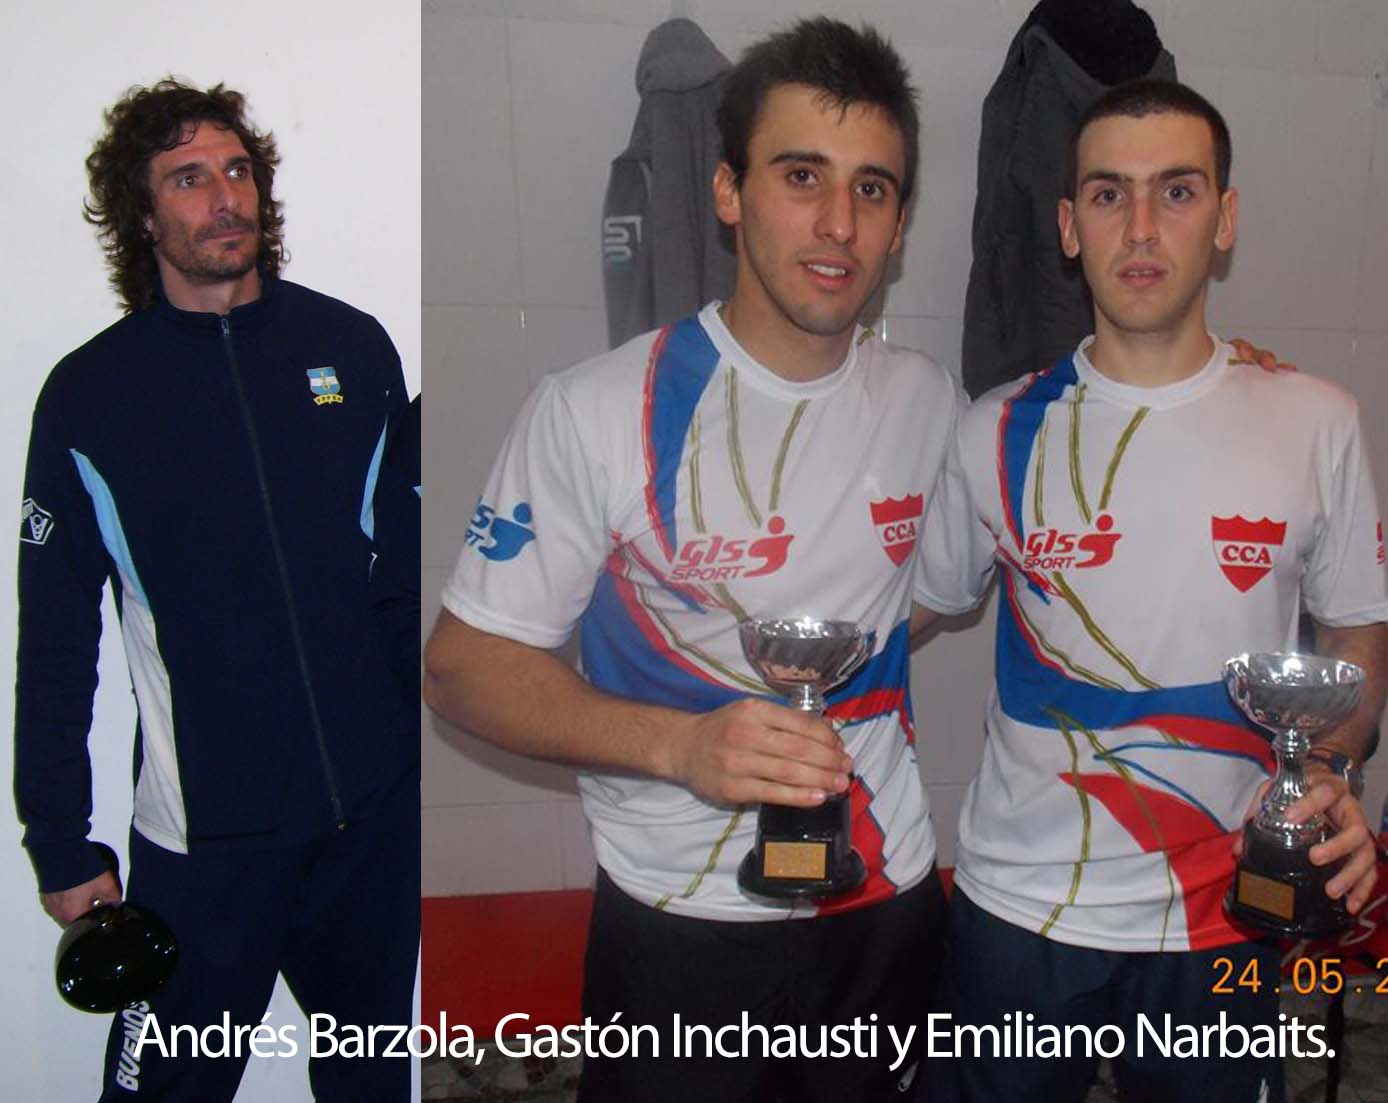 Andres Barzola, Gaston Inchausti y Emiliano Narbaits